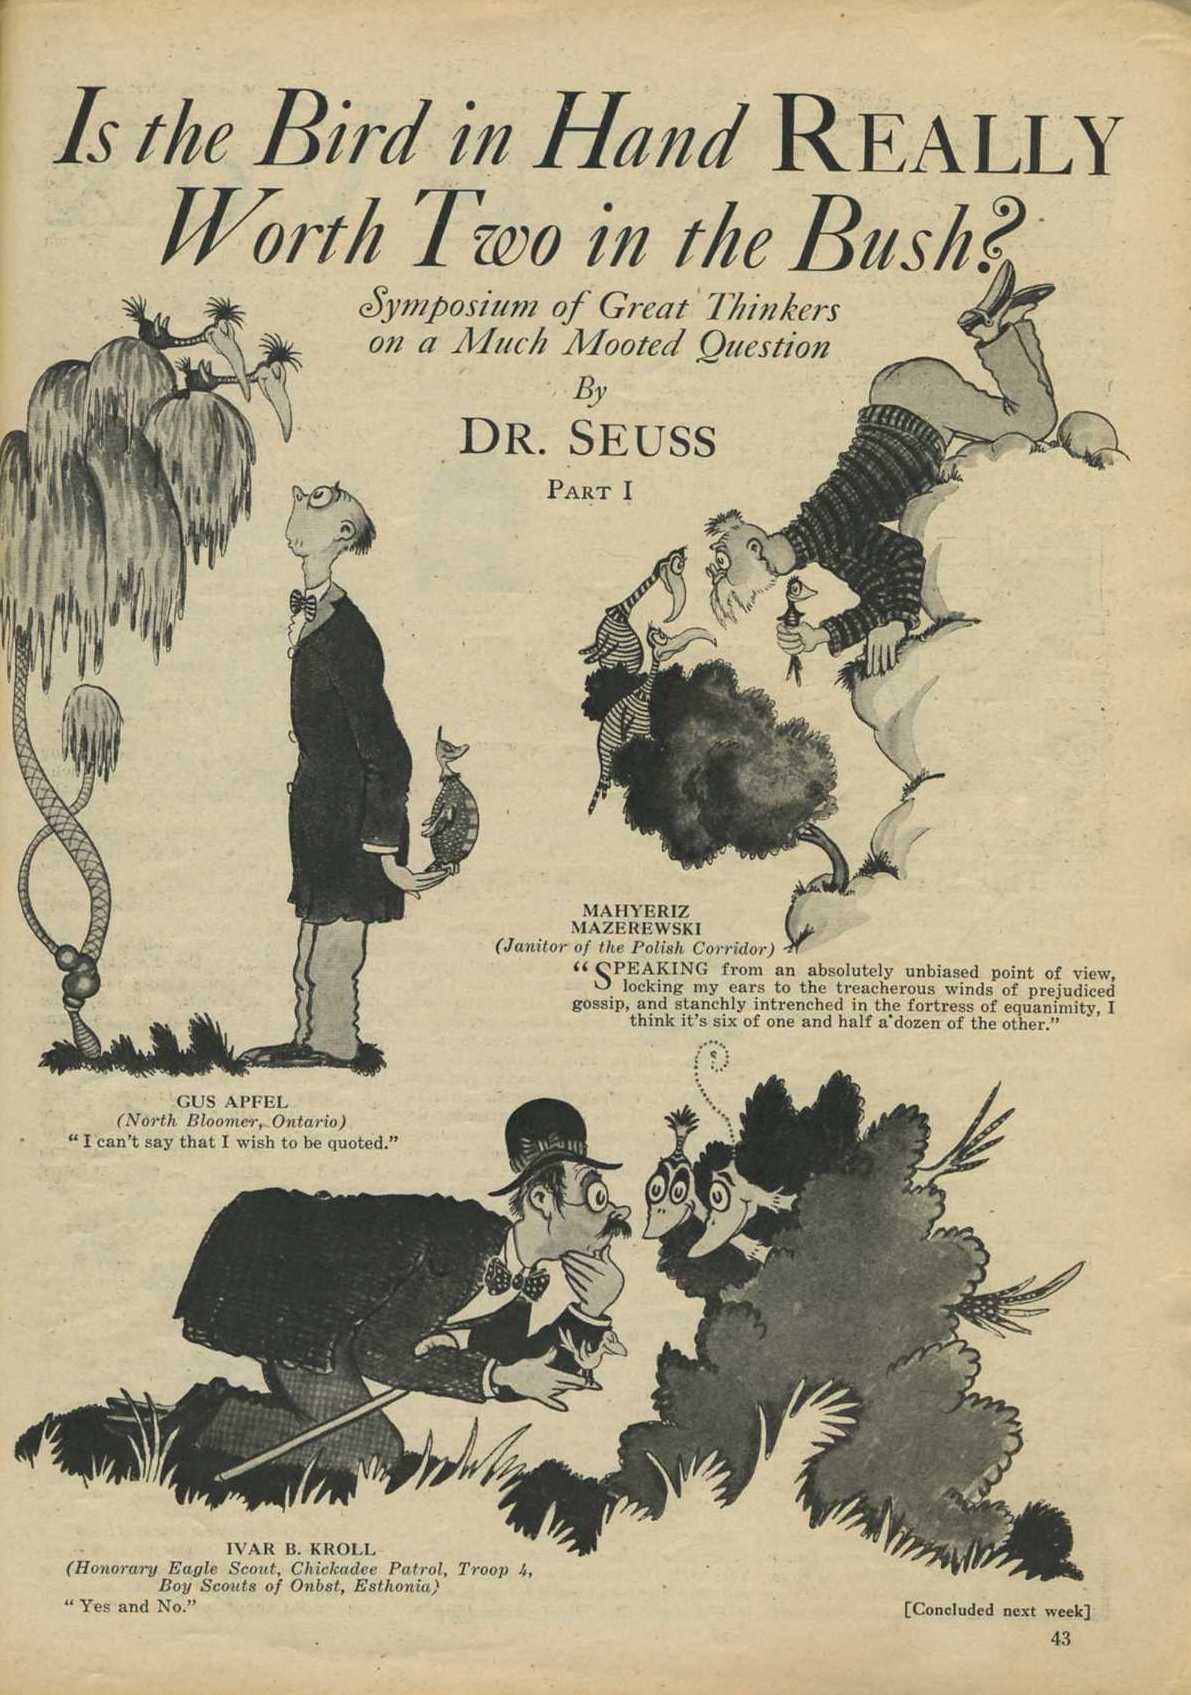 Dr Seuss in Liberty Magazine